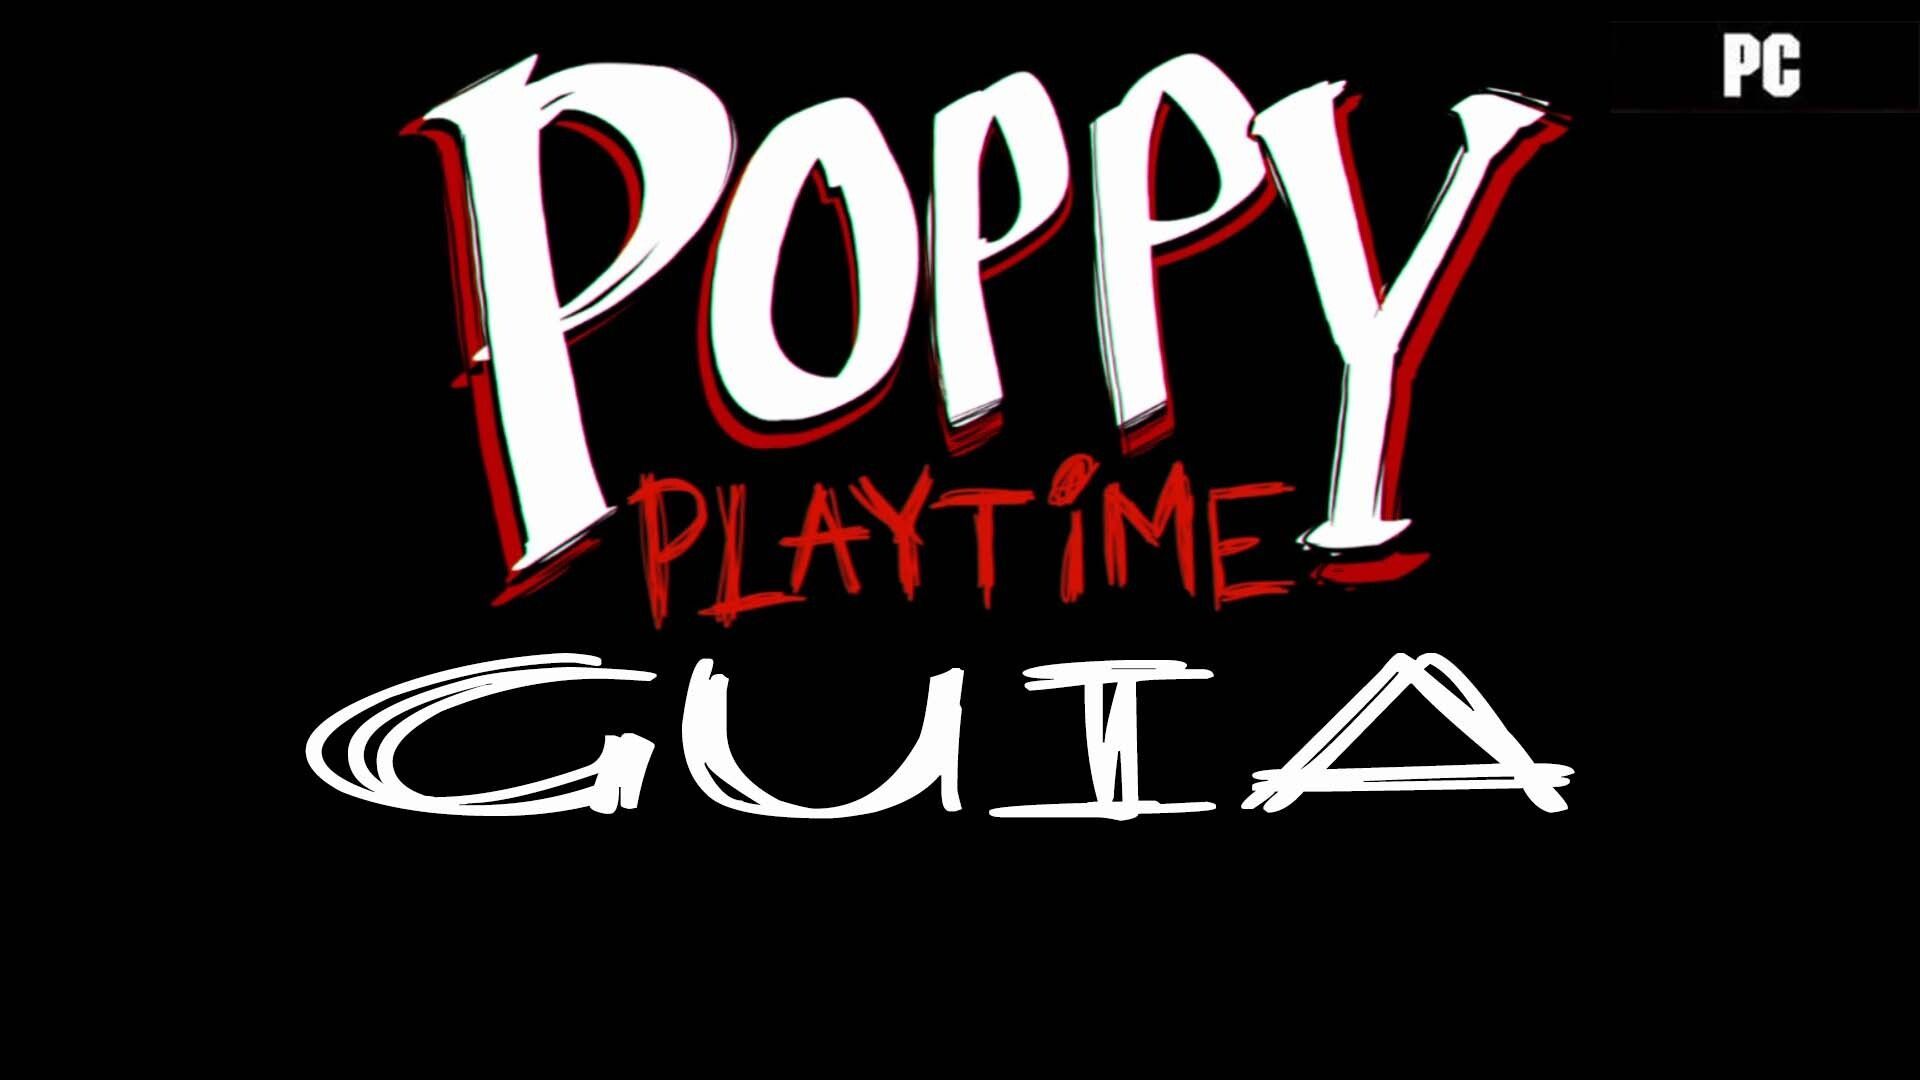 Логотип playtime. Poppy Playtime логотип. Логотип Поппи плей тайм. Логотип Плейтайм ко. Poppy Playtime надпись.